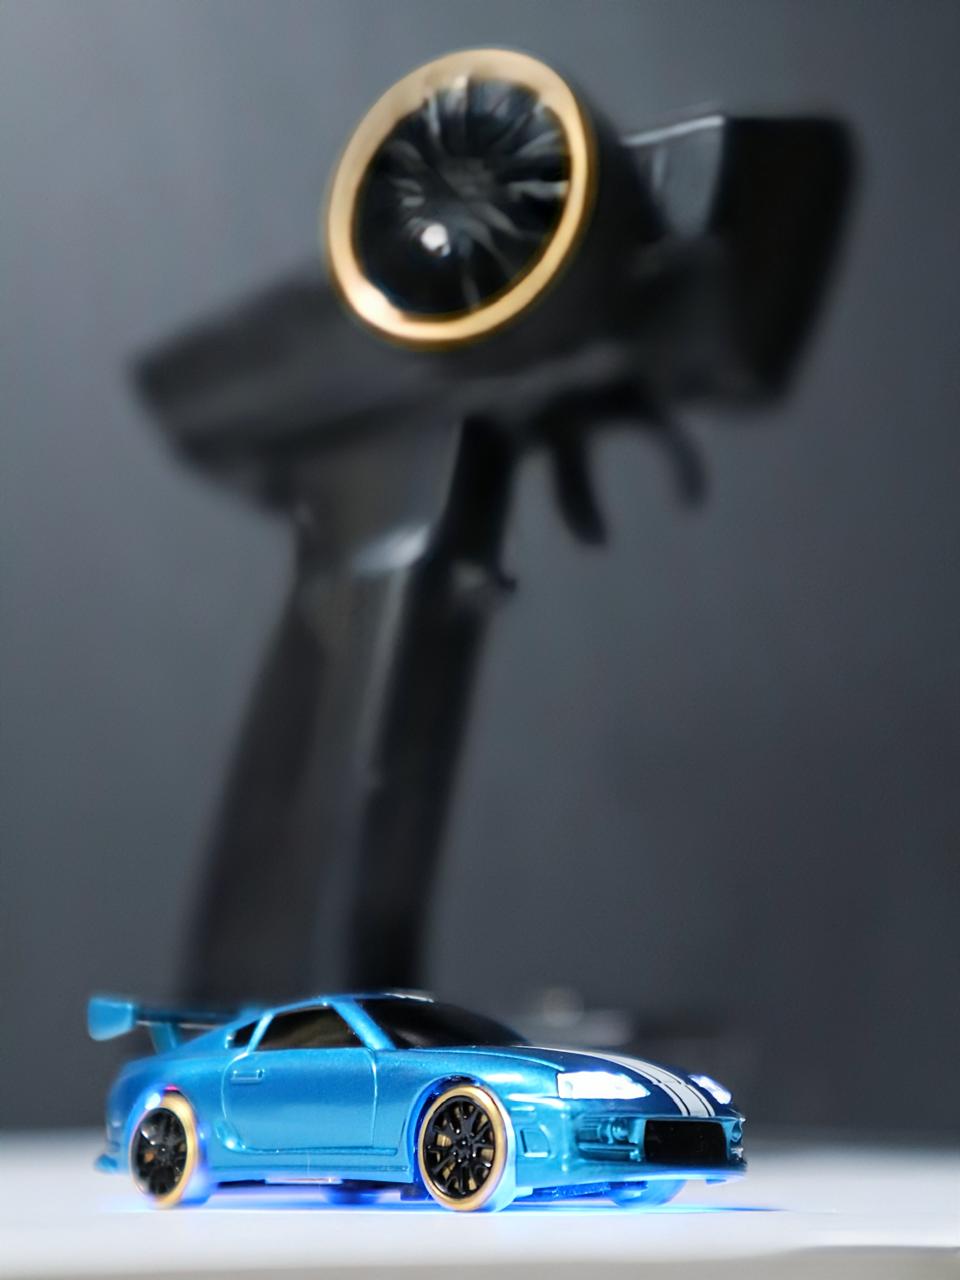 Turbo Racing 1:76 Mini Drift RC Car (Blue Sports)